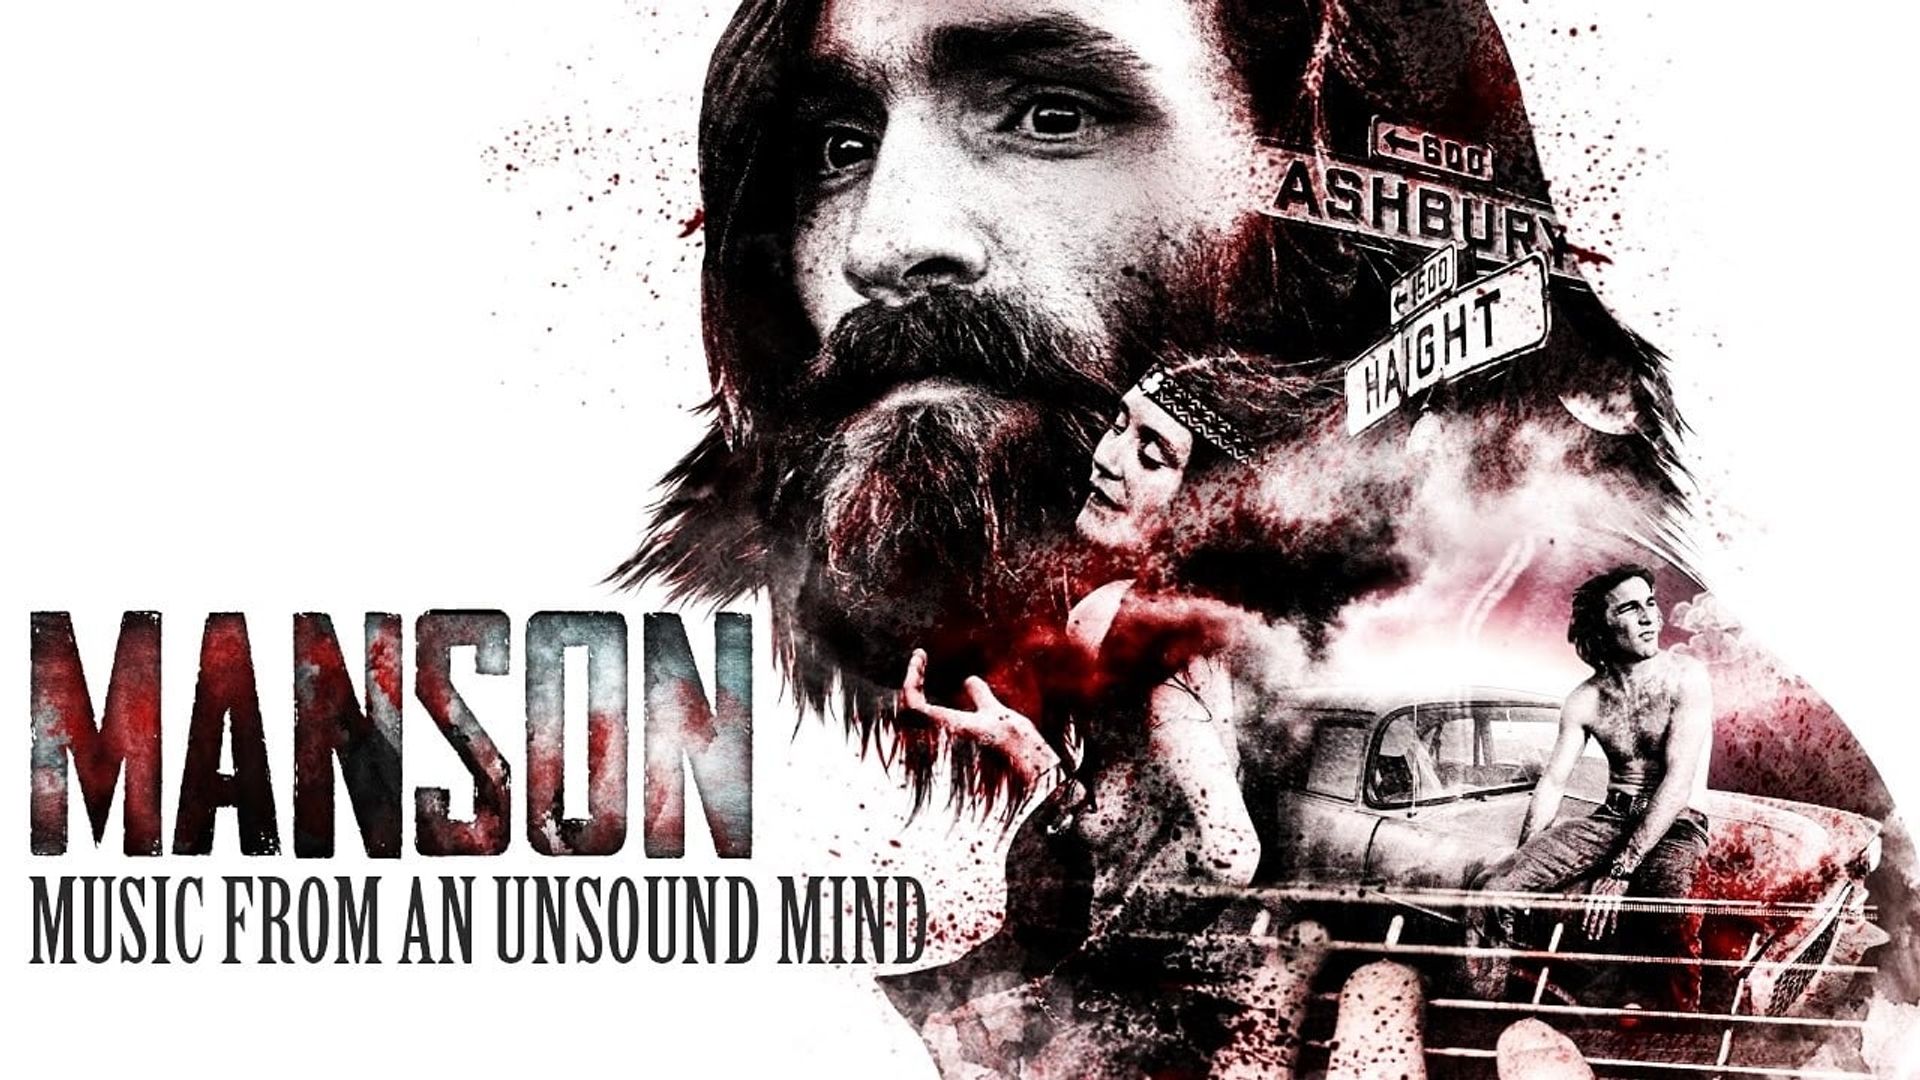 Manson: Music from an Unsound Mind background